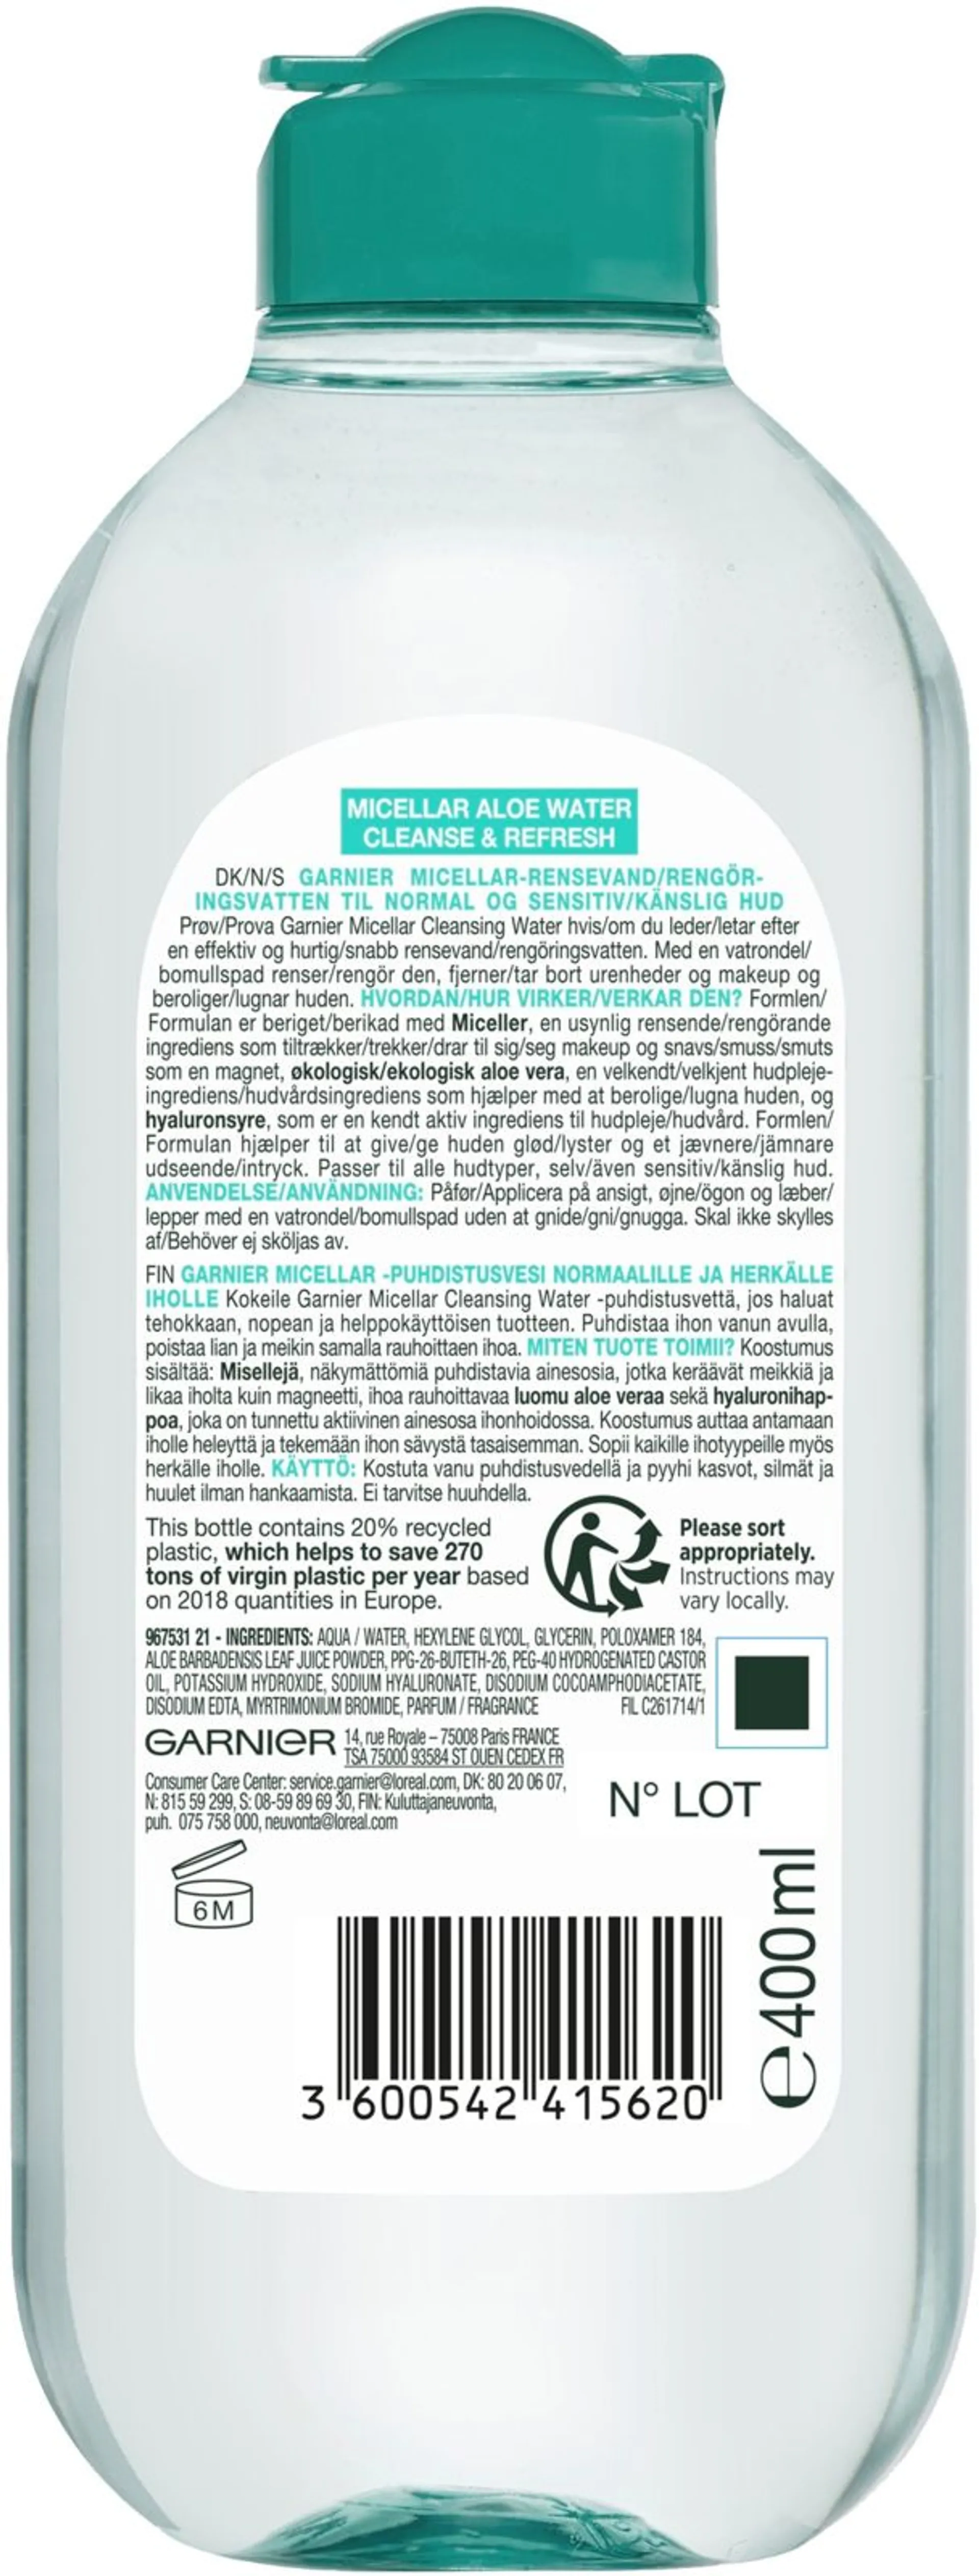 Garnier SkinActive Micellar Aloe Water Cleanse & Refresh puhdistusvesi 400ml - 2